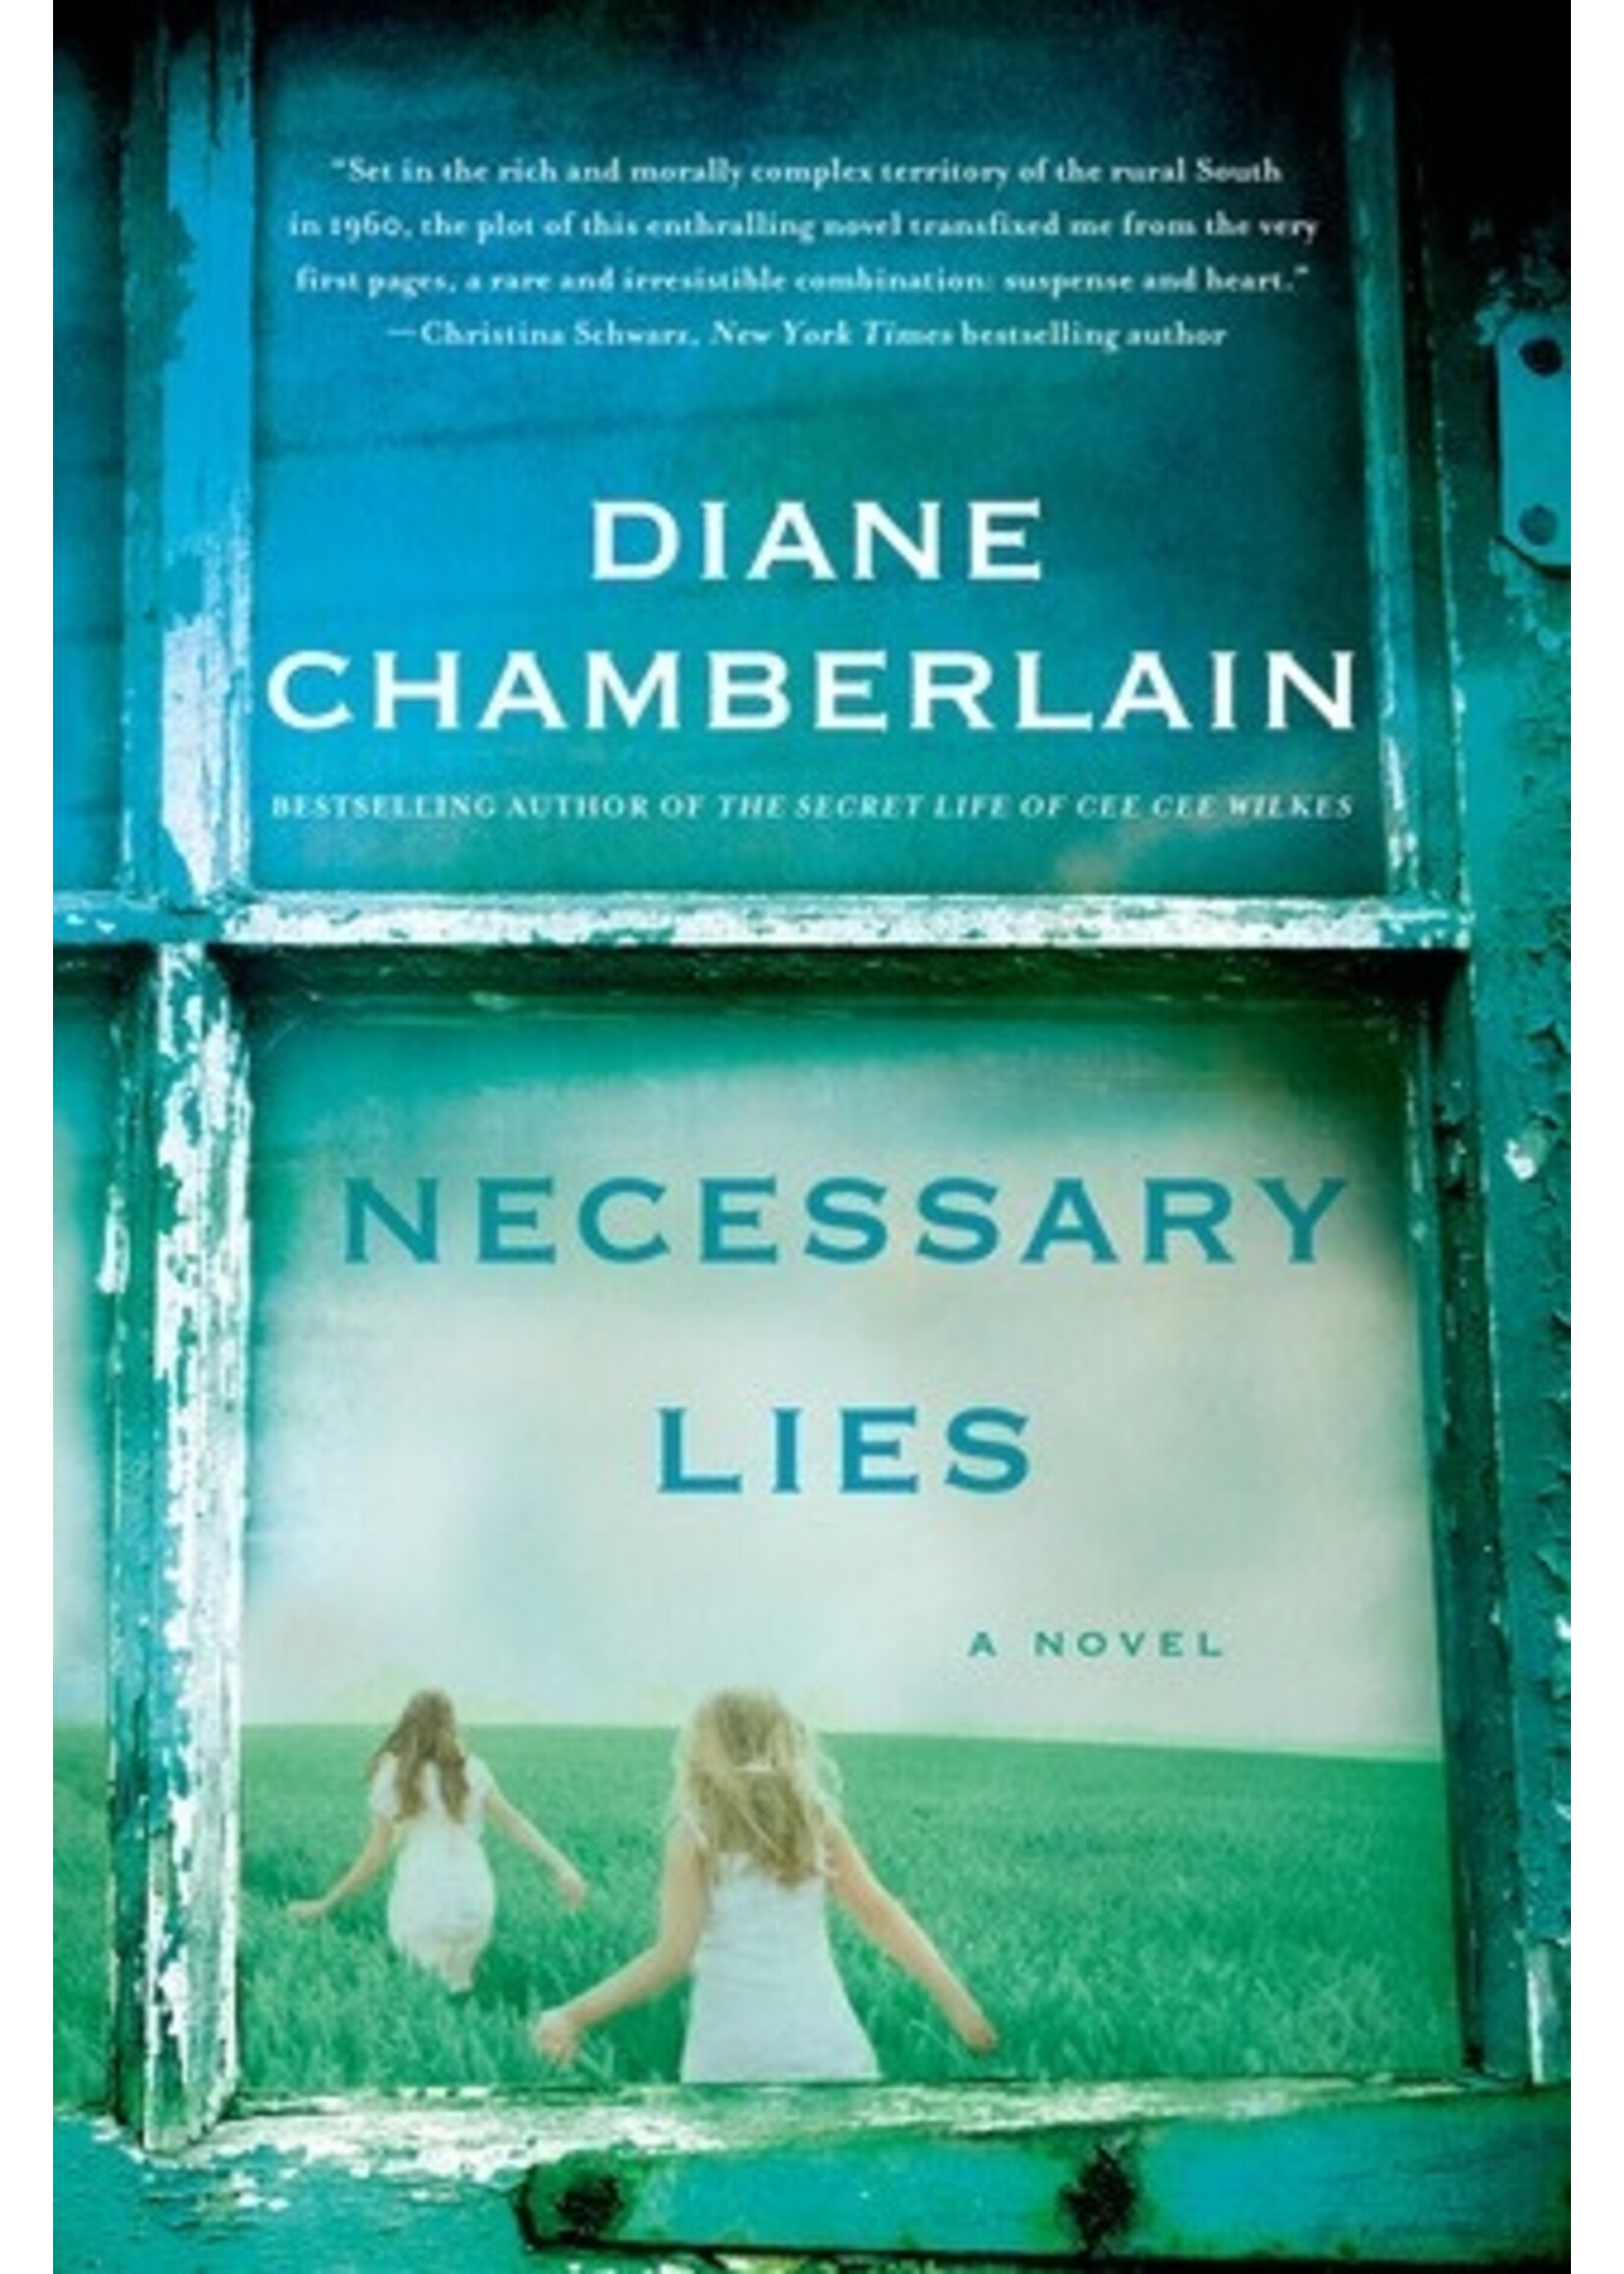 Necessary Lies (Necessary Lies #1) by Diane Chamberlain